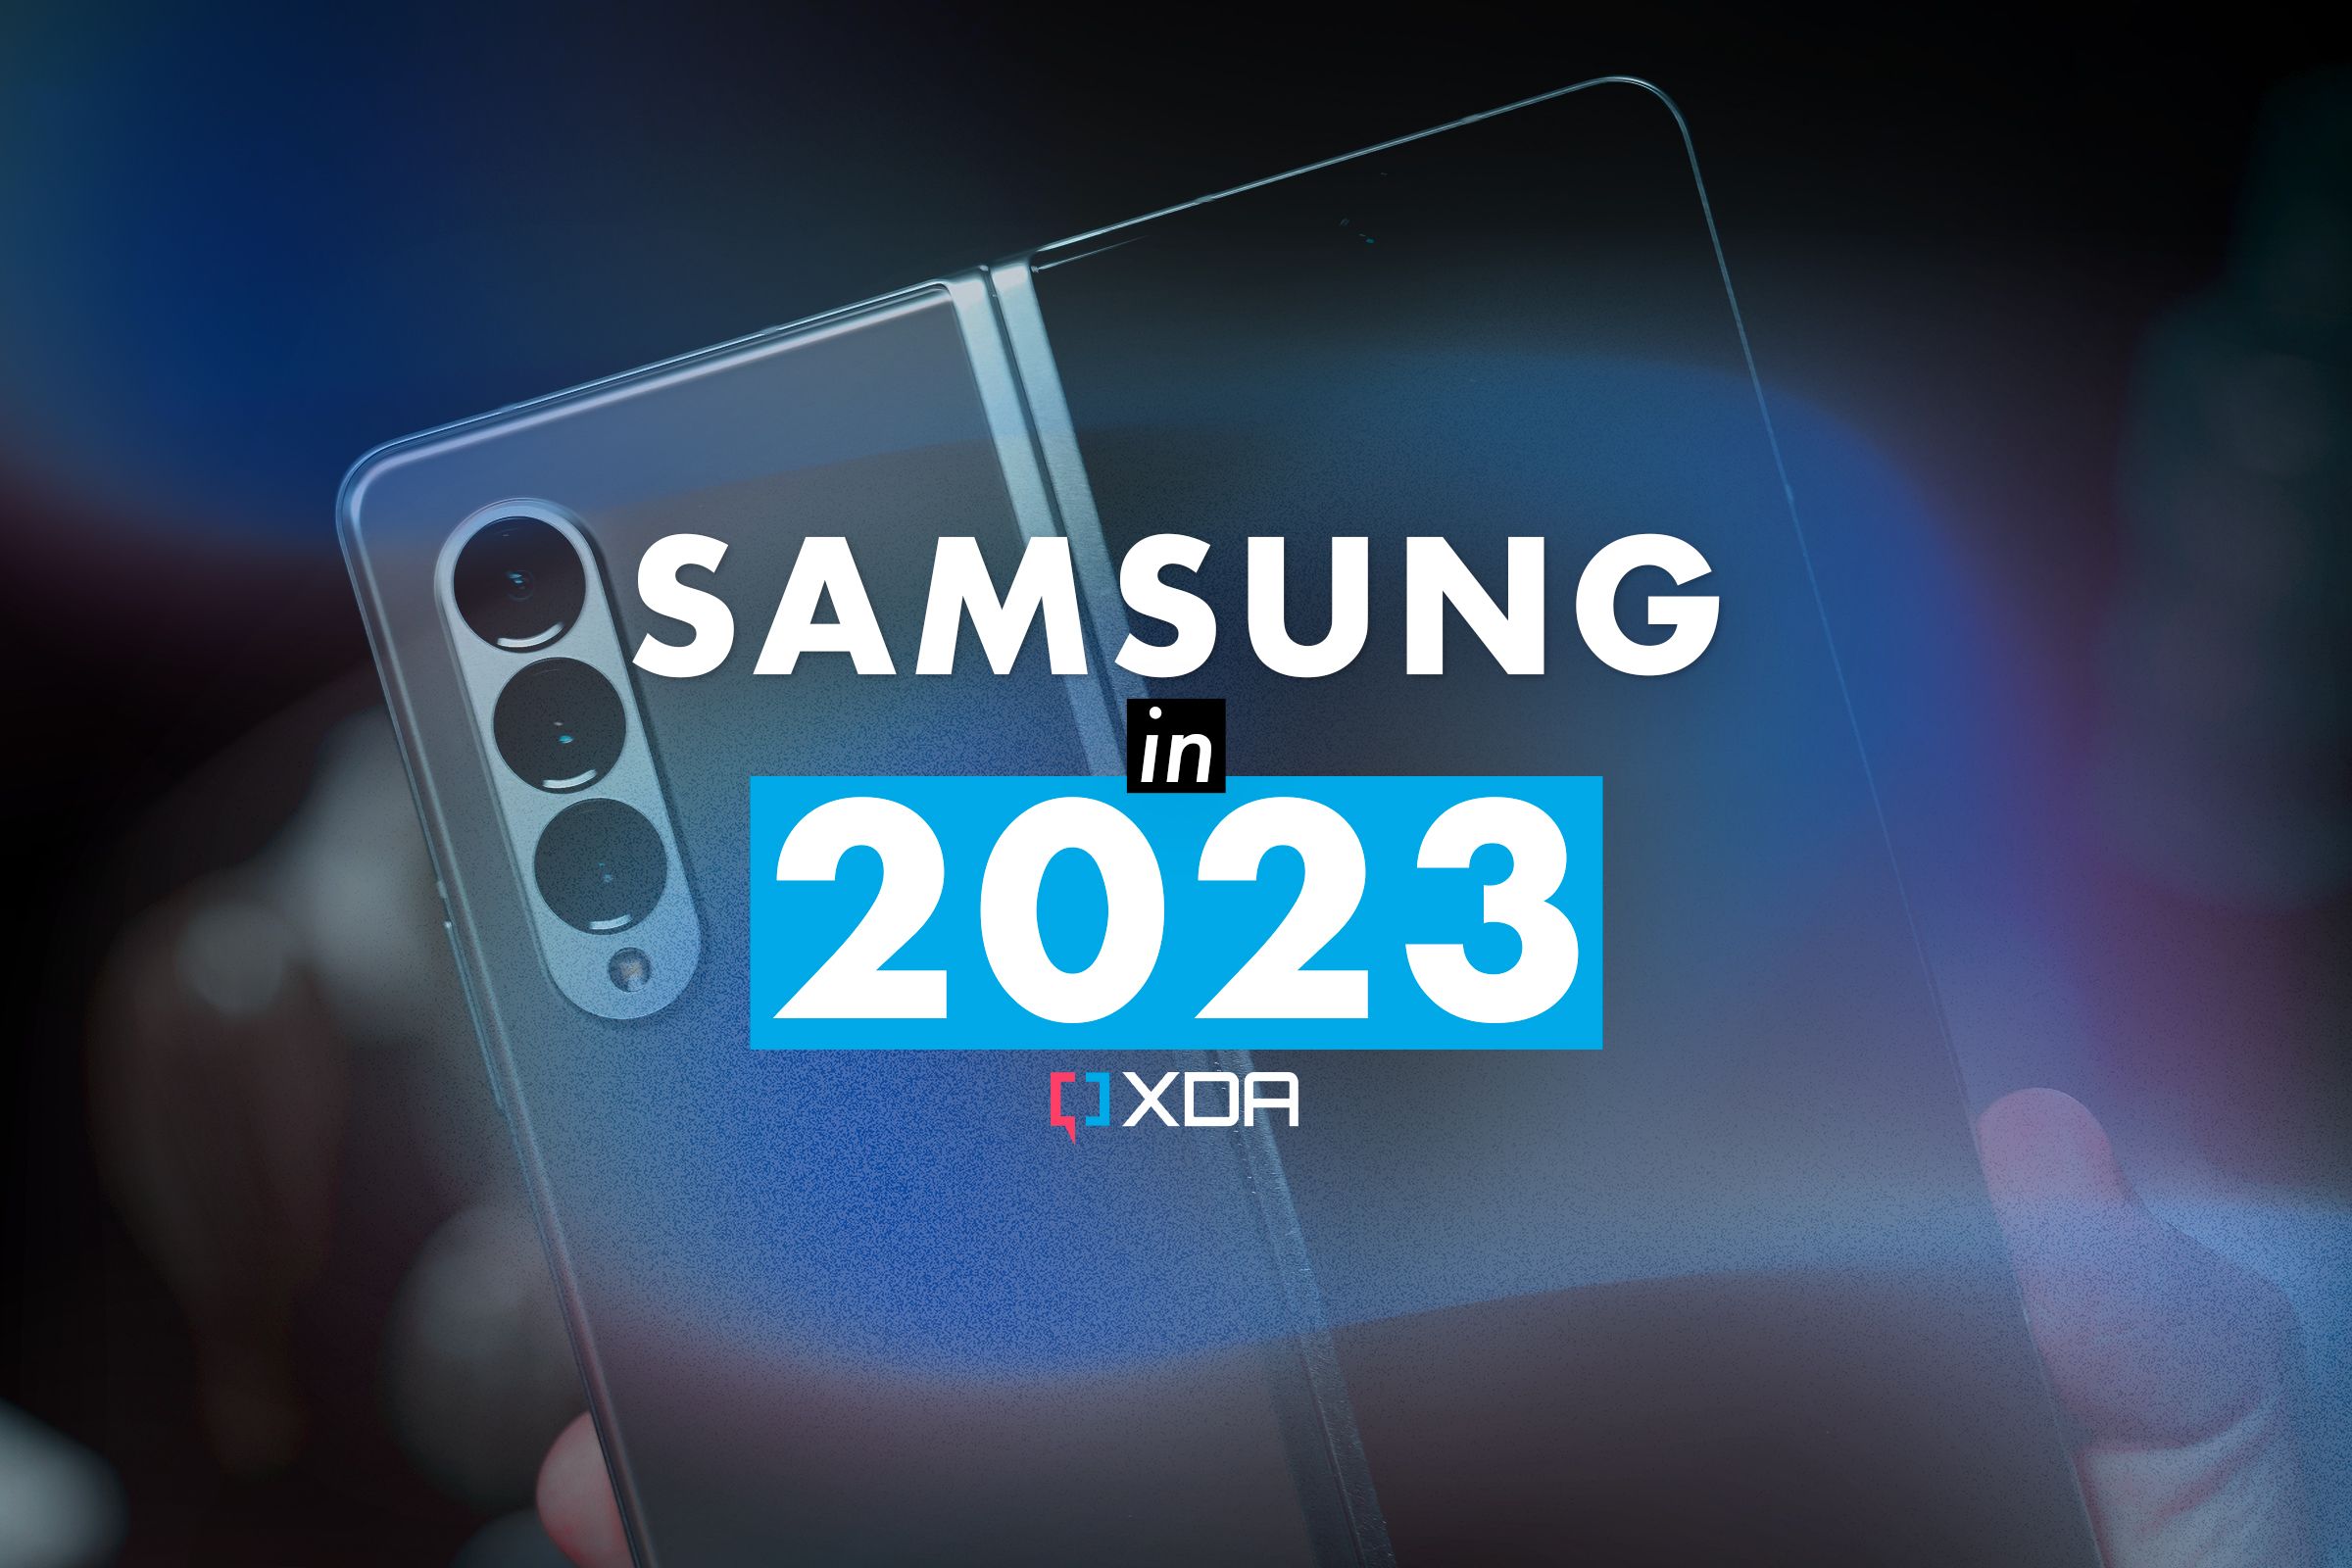 Samsung in 2023